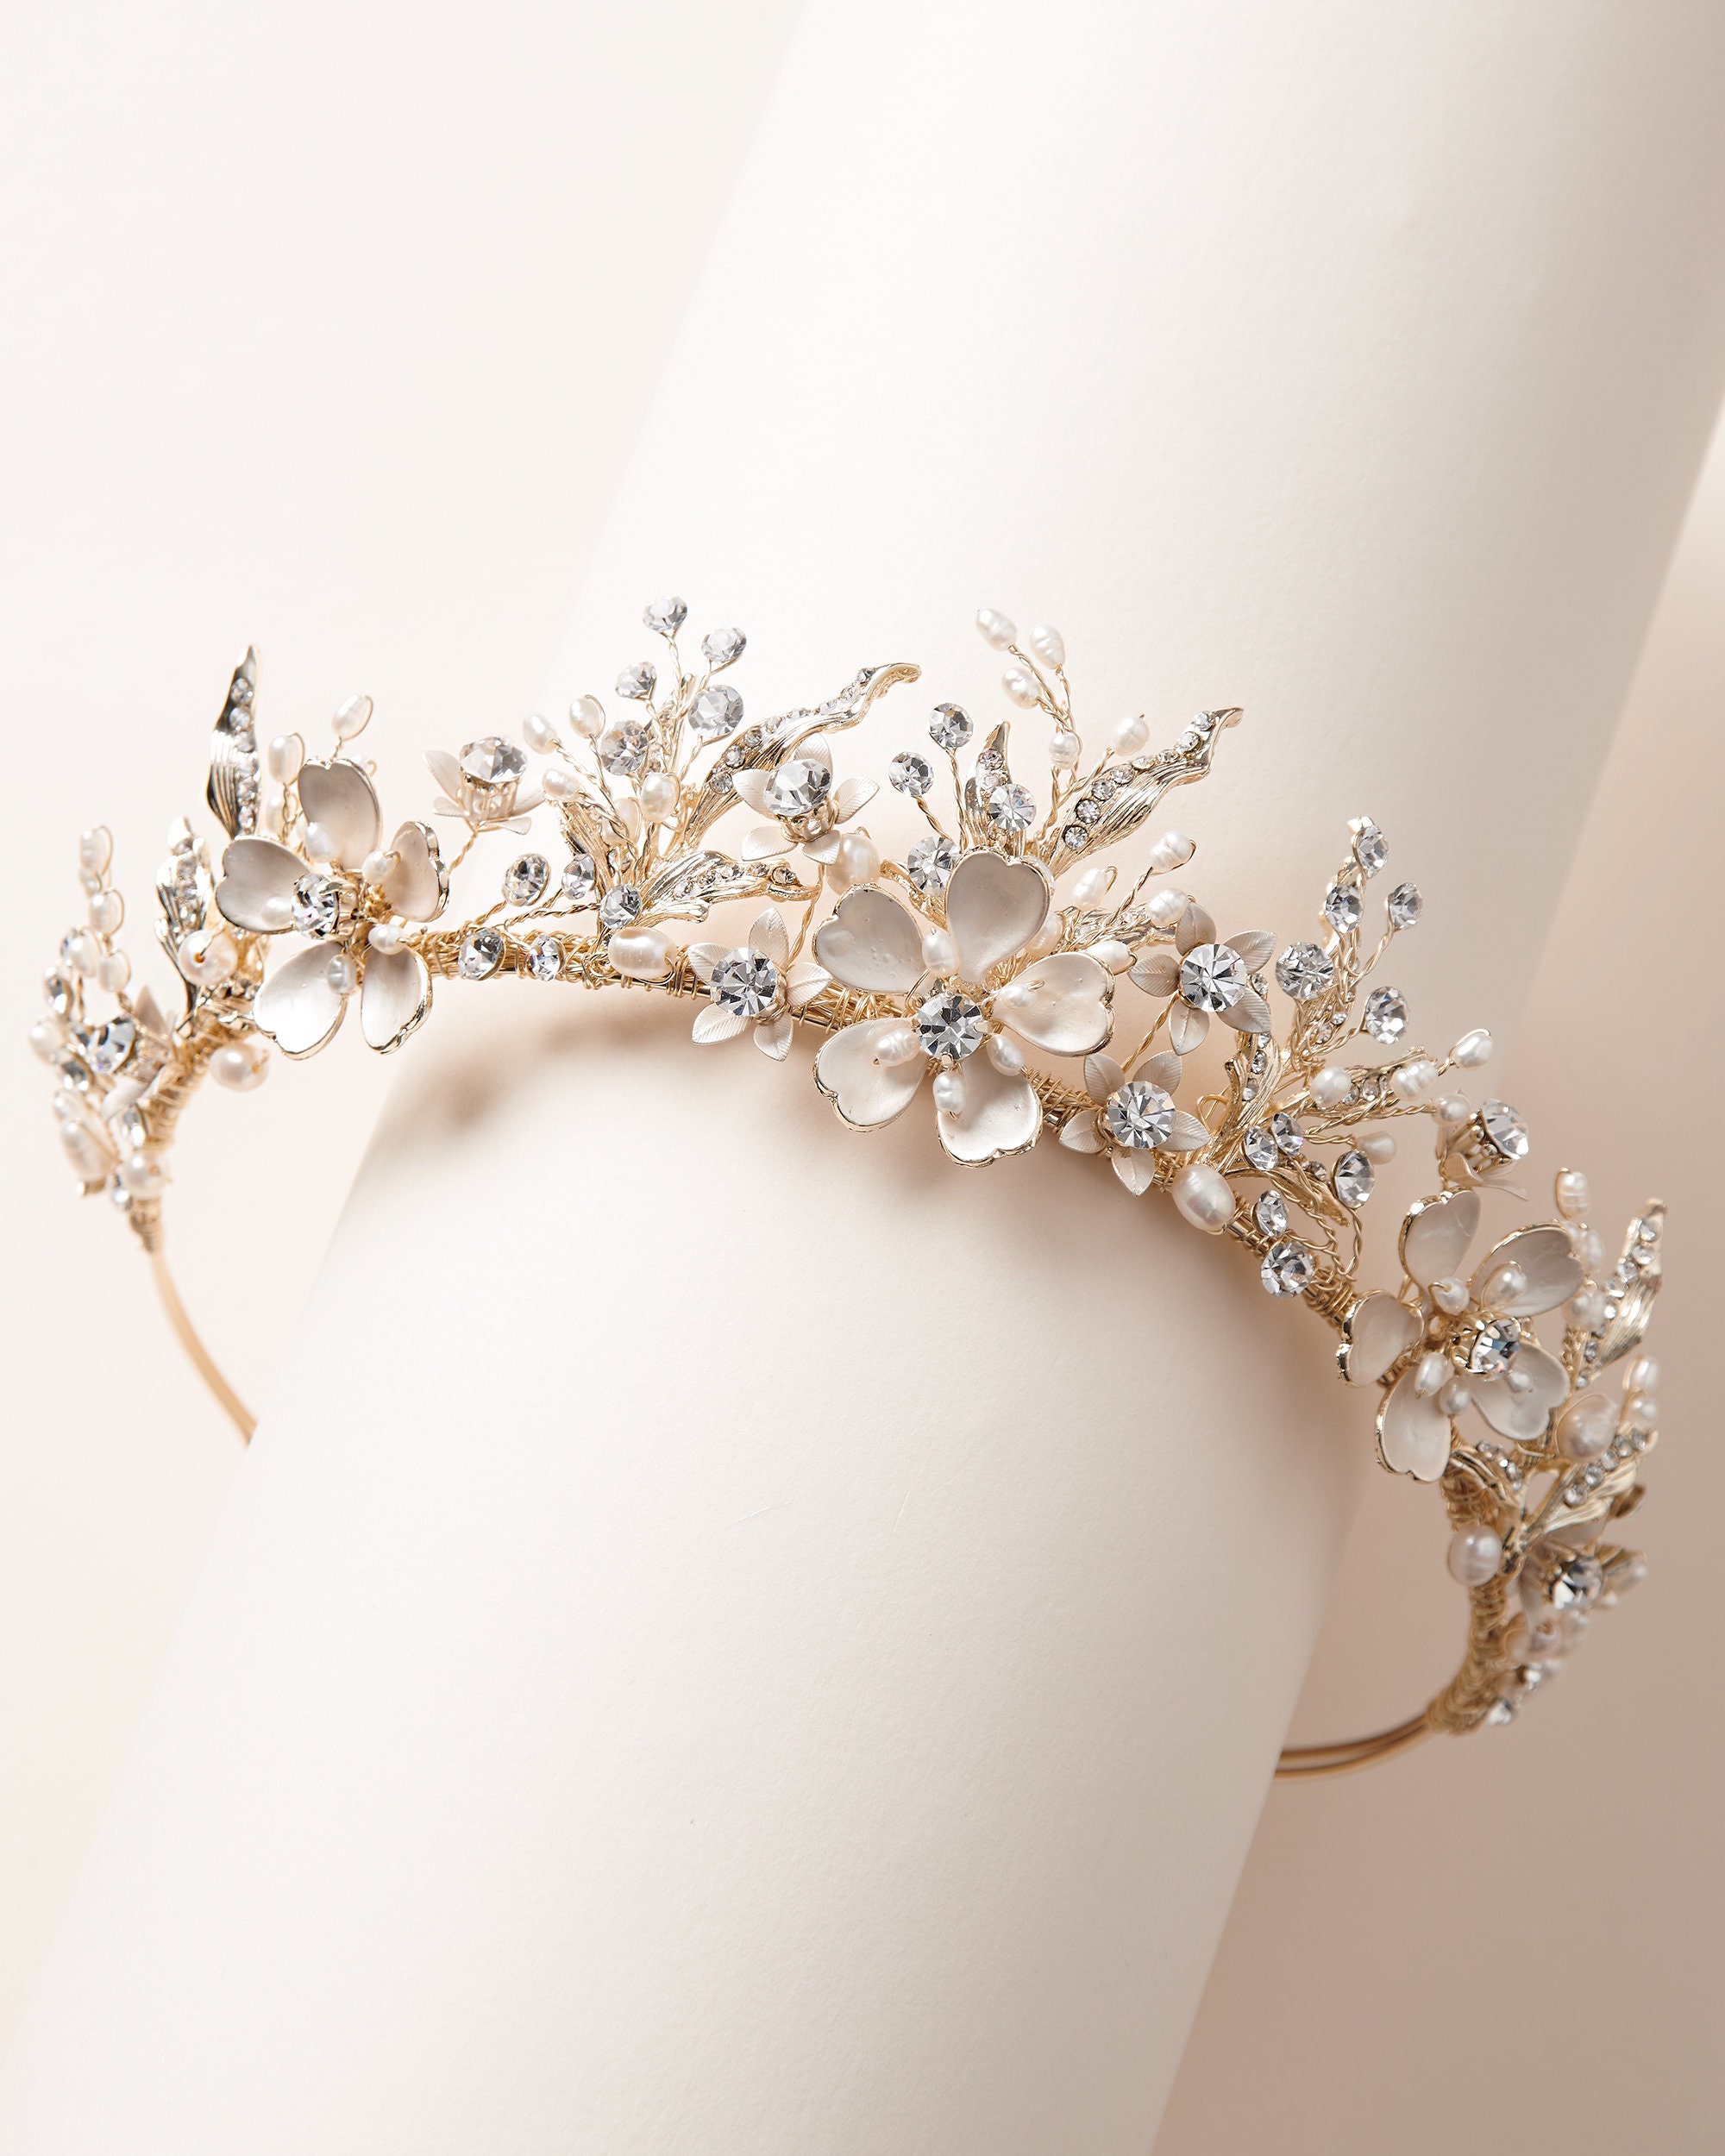 Silver or Gold Pearl Wedding Bridal Necklace & Tiara Set SALE! Floral Design 